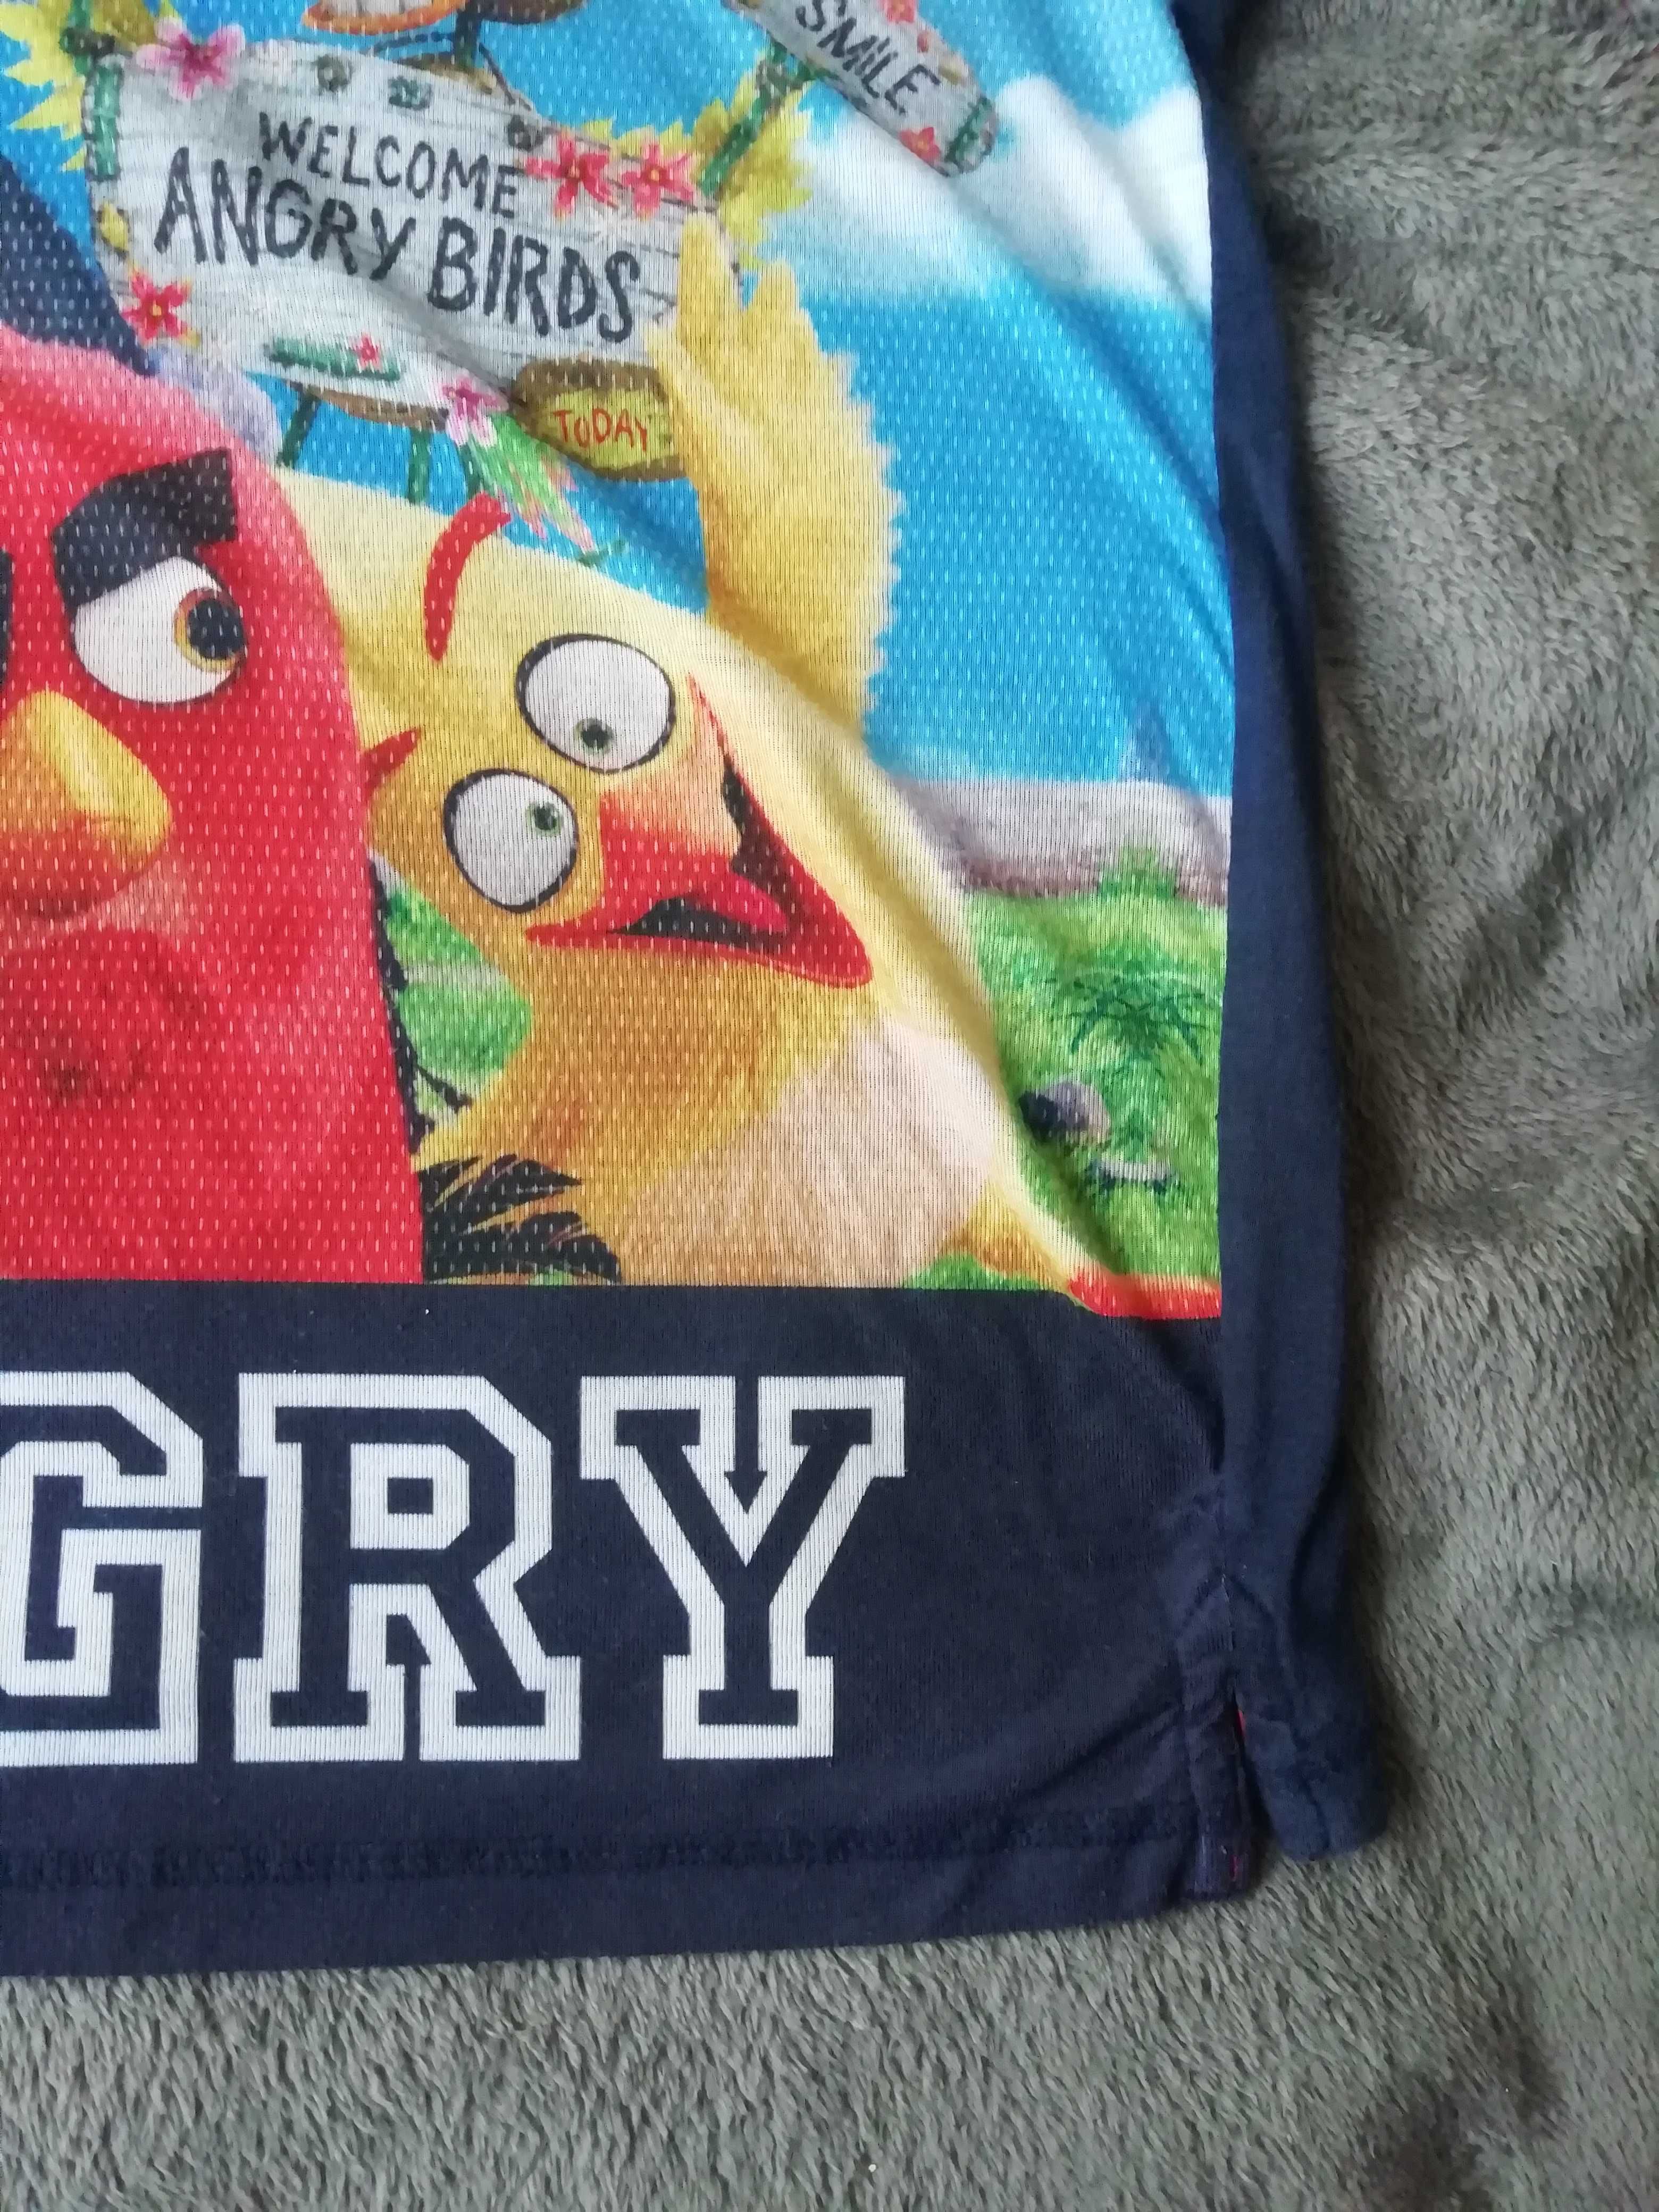 Podkoszulek Angry Birds ok 146